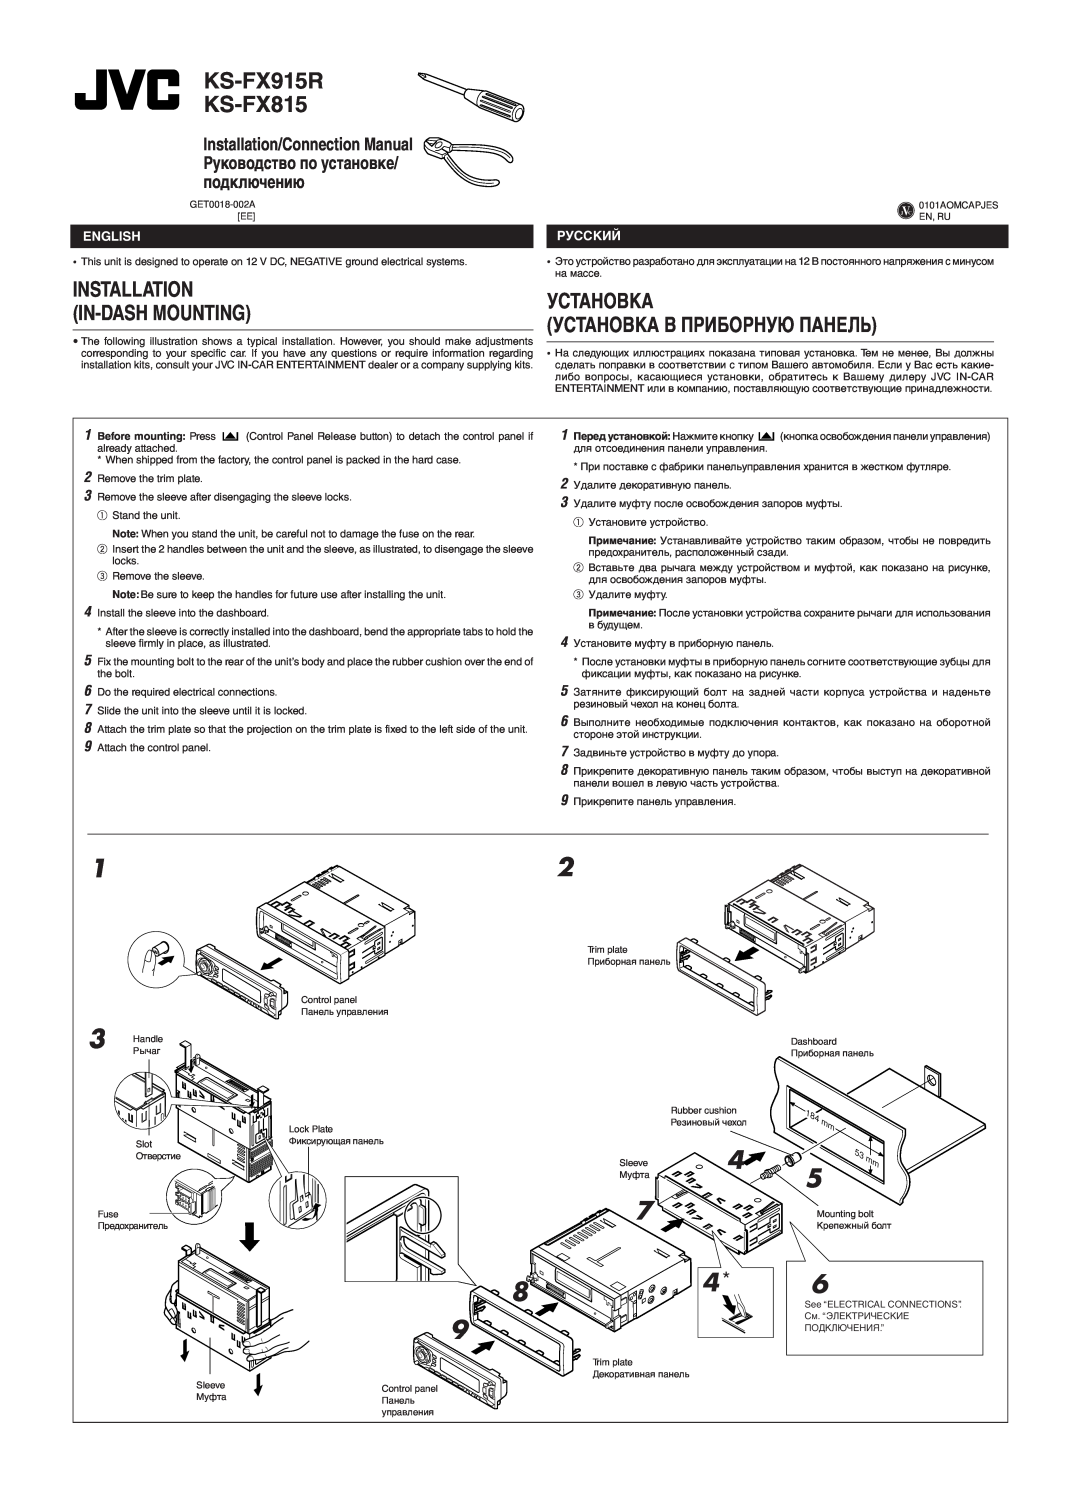 JVC manual Установка Установка В Приборную Панель, Installation In-Dash Mounting, English, Русский, KS-FX915R KS-FX815 